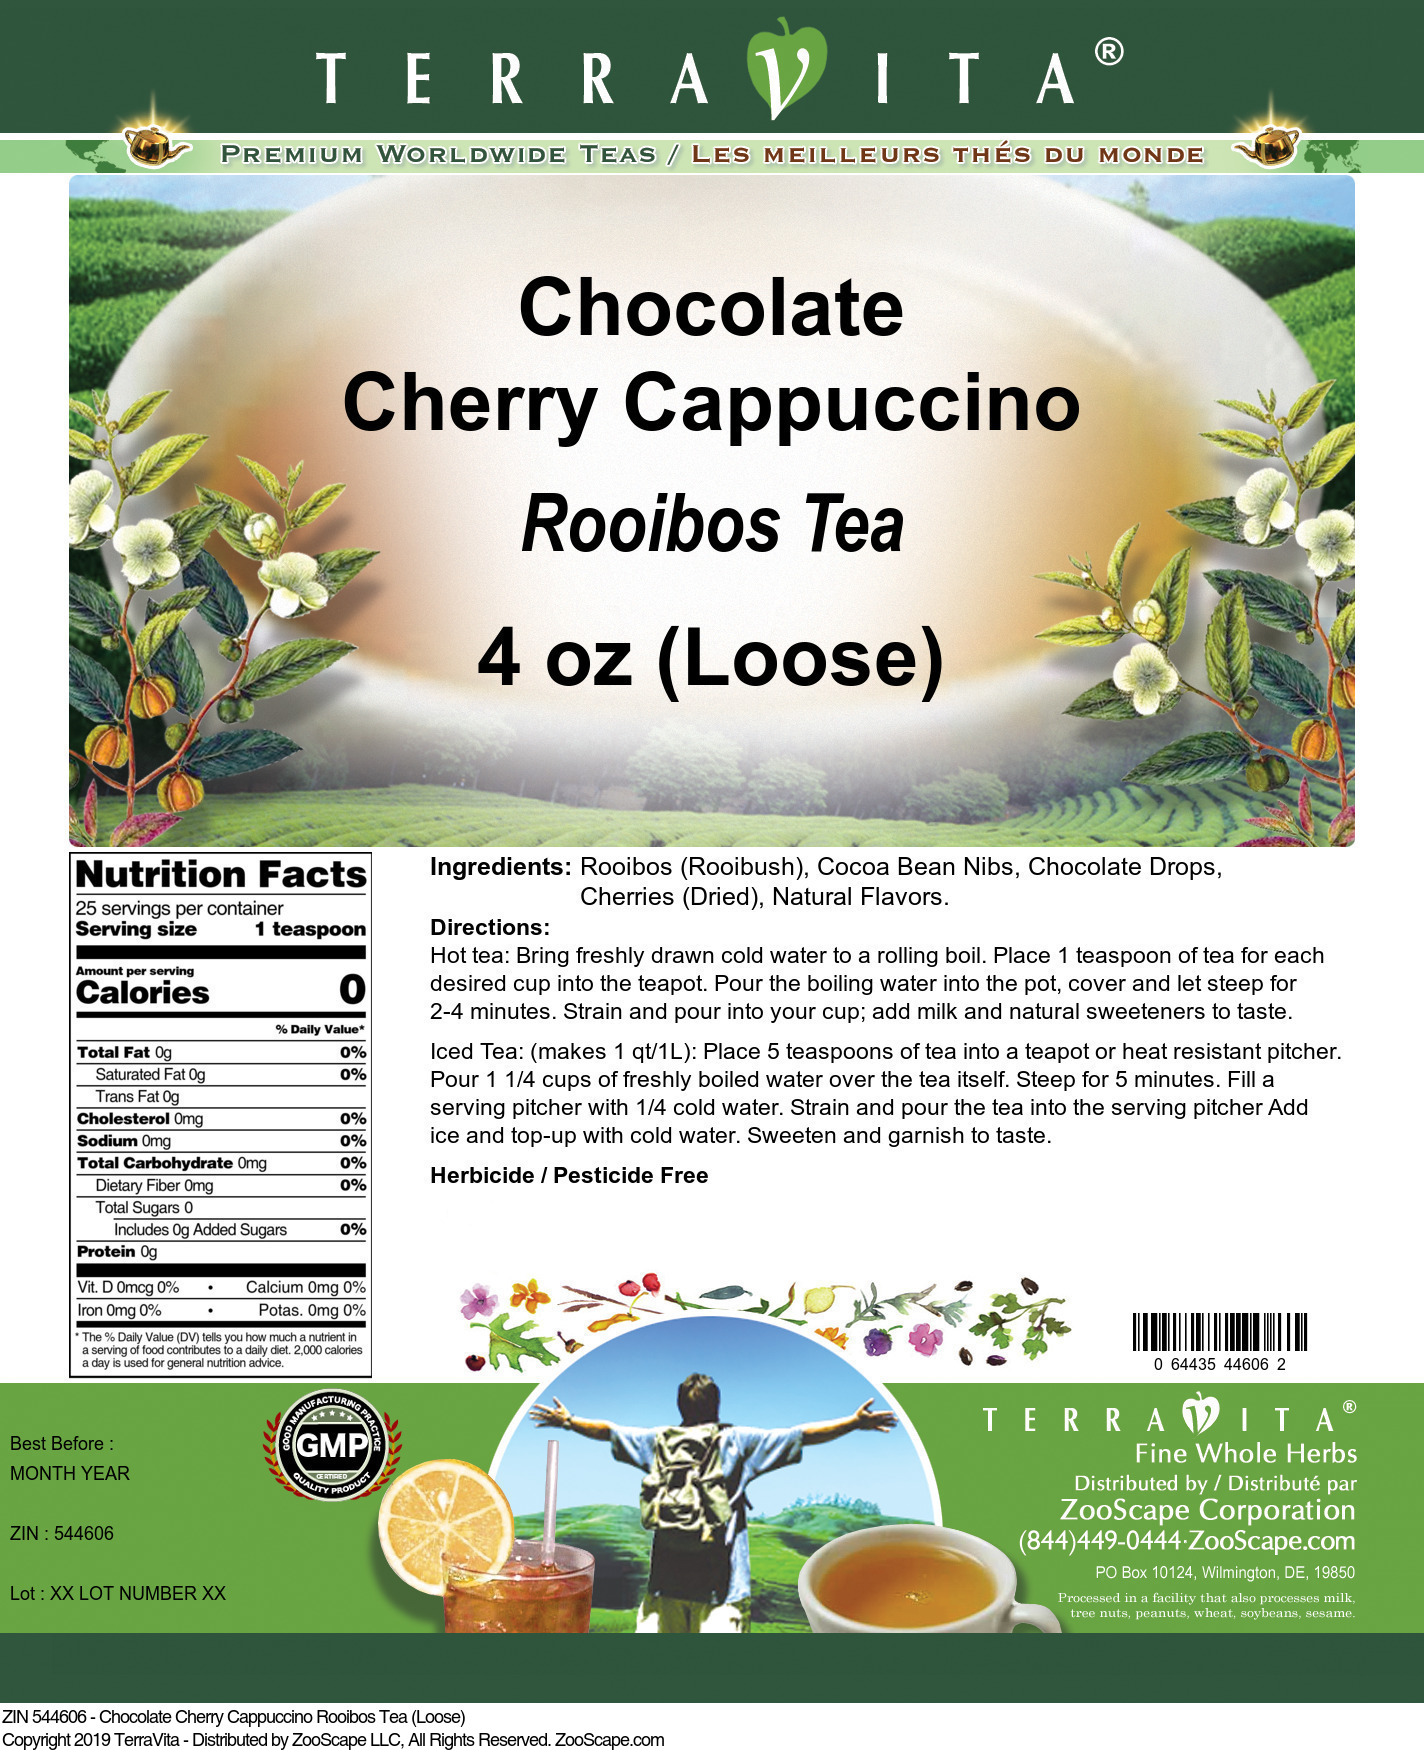 Chocolate Cherry Cappuccino Rooibos Tea (Loose) - Label